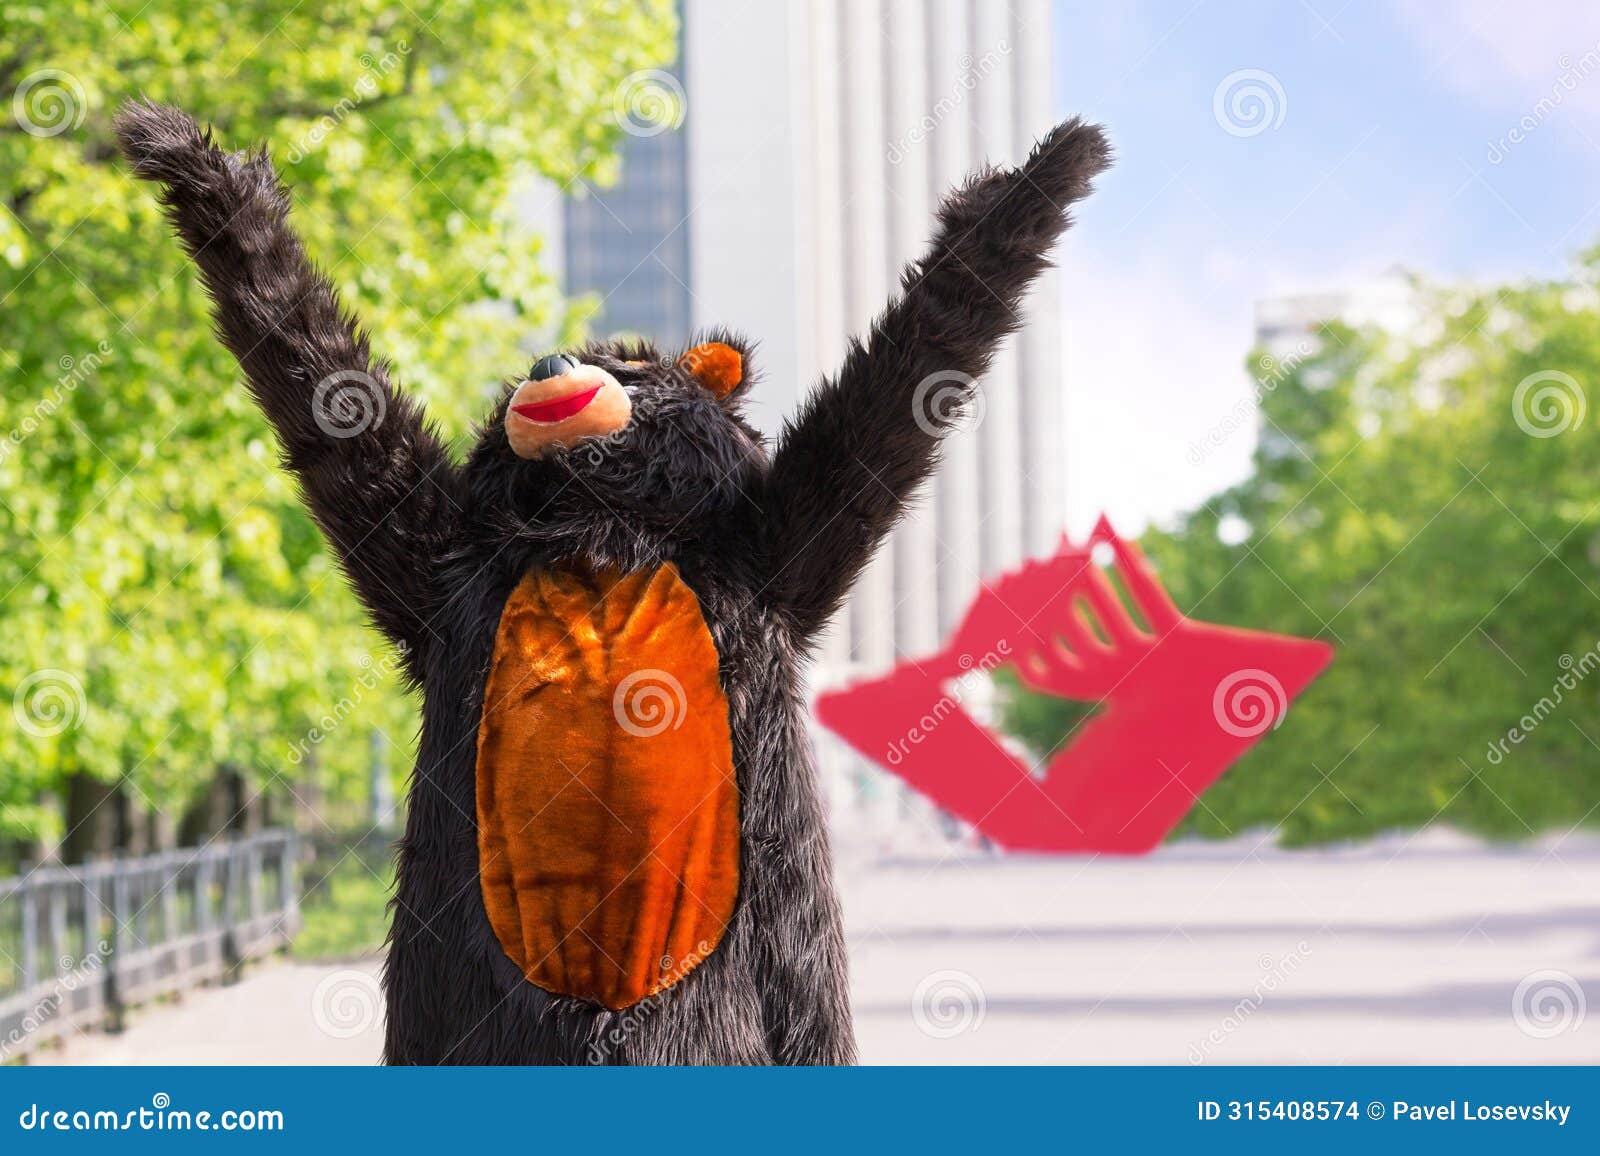 actor dressed as bear enjoys the sun on avenue of